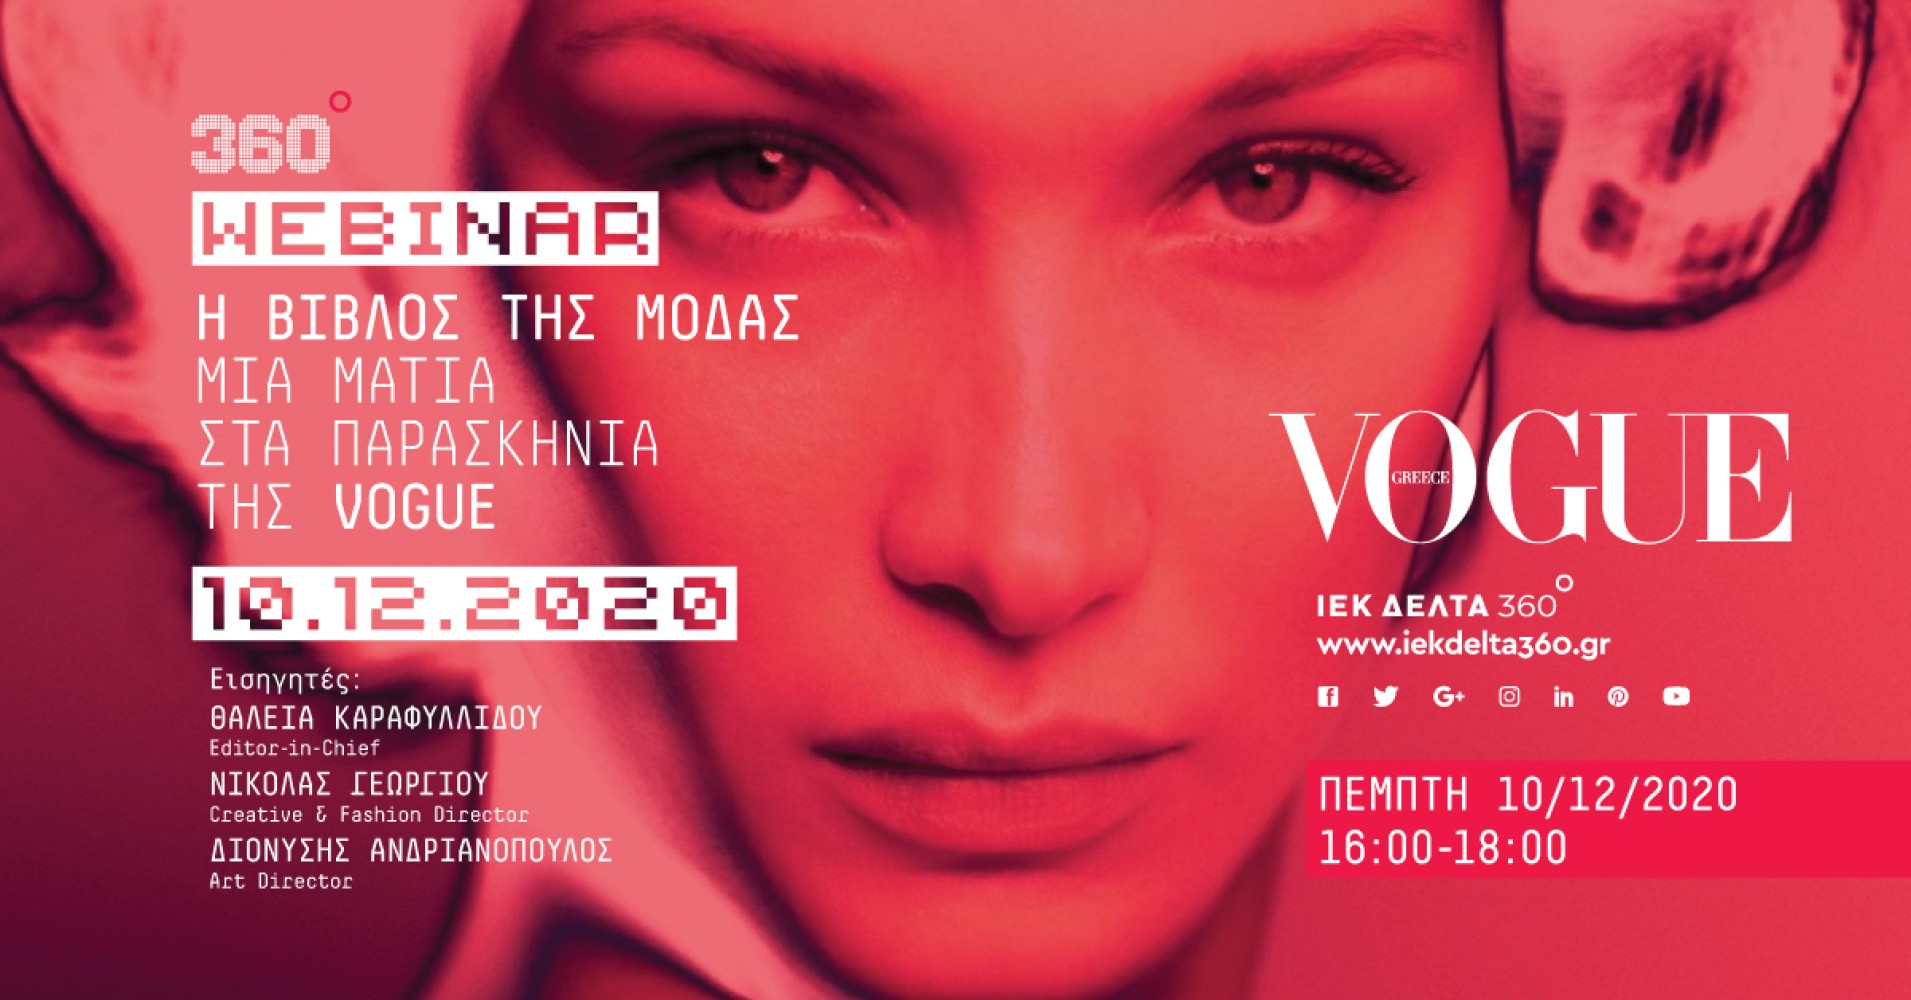 Webinar by Vogue : Η Βίβλος της Μόδας - Μια ματιά στα παρασκήνια της Vogue